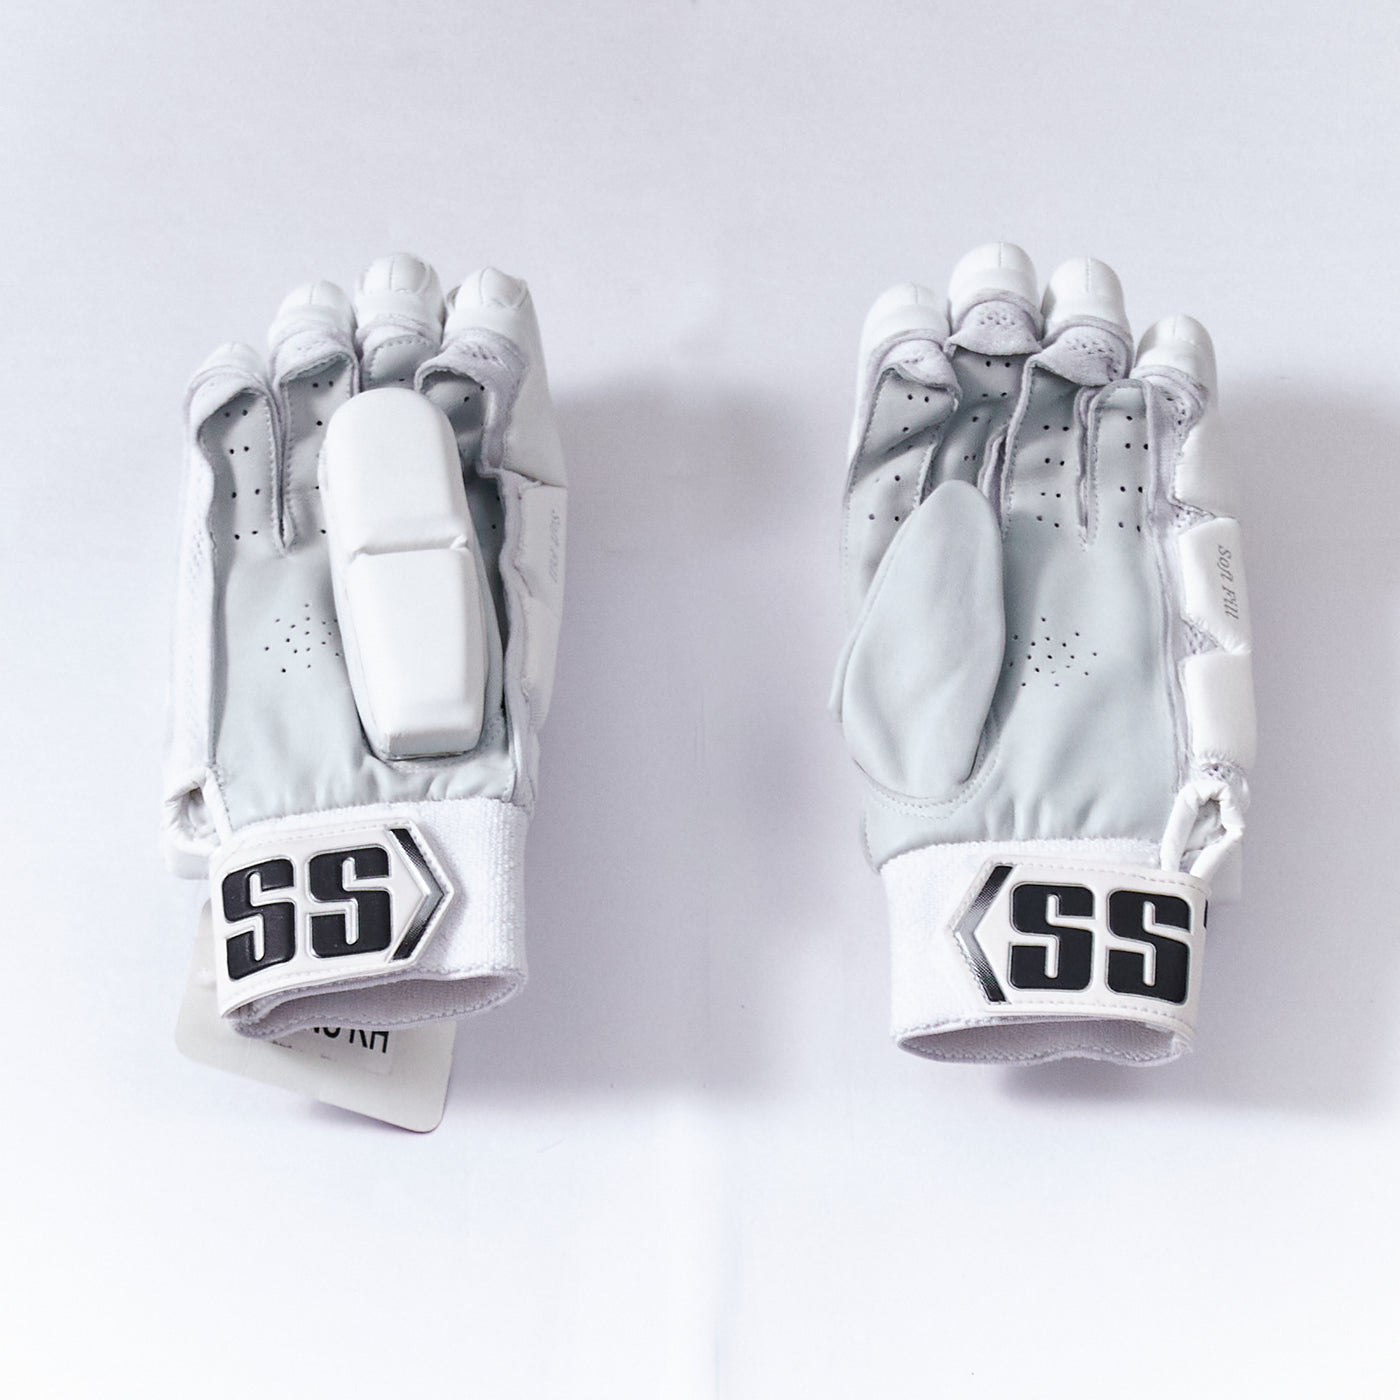 SS Super Test White Batting Gloves